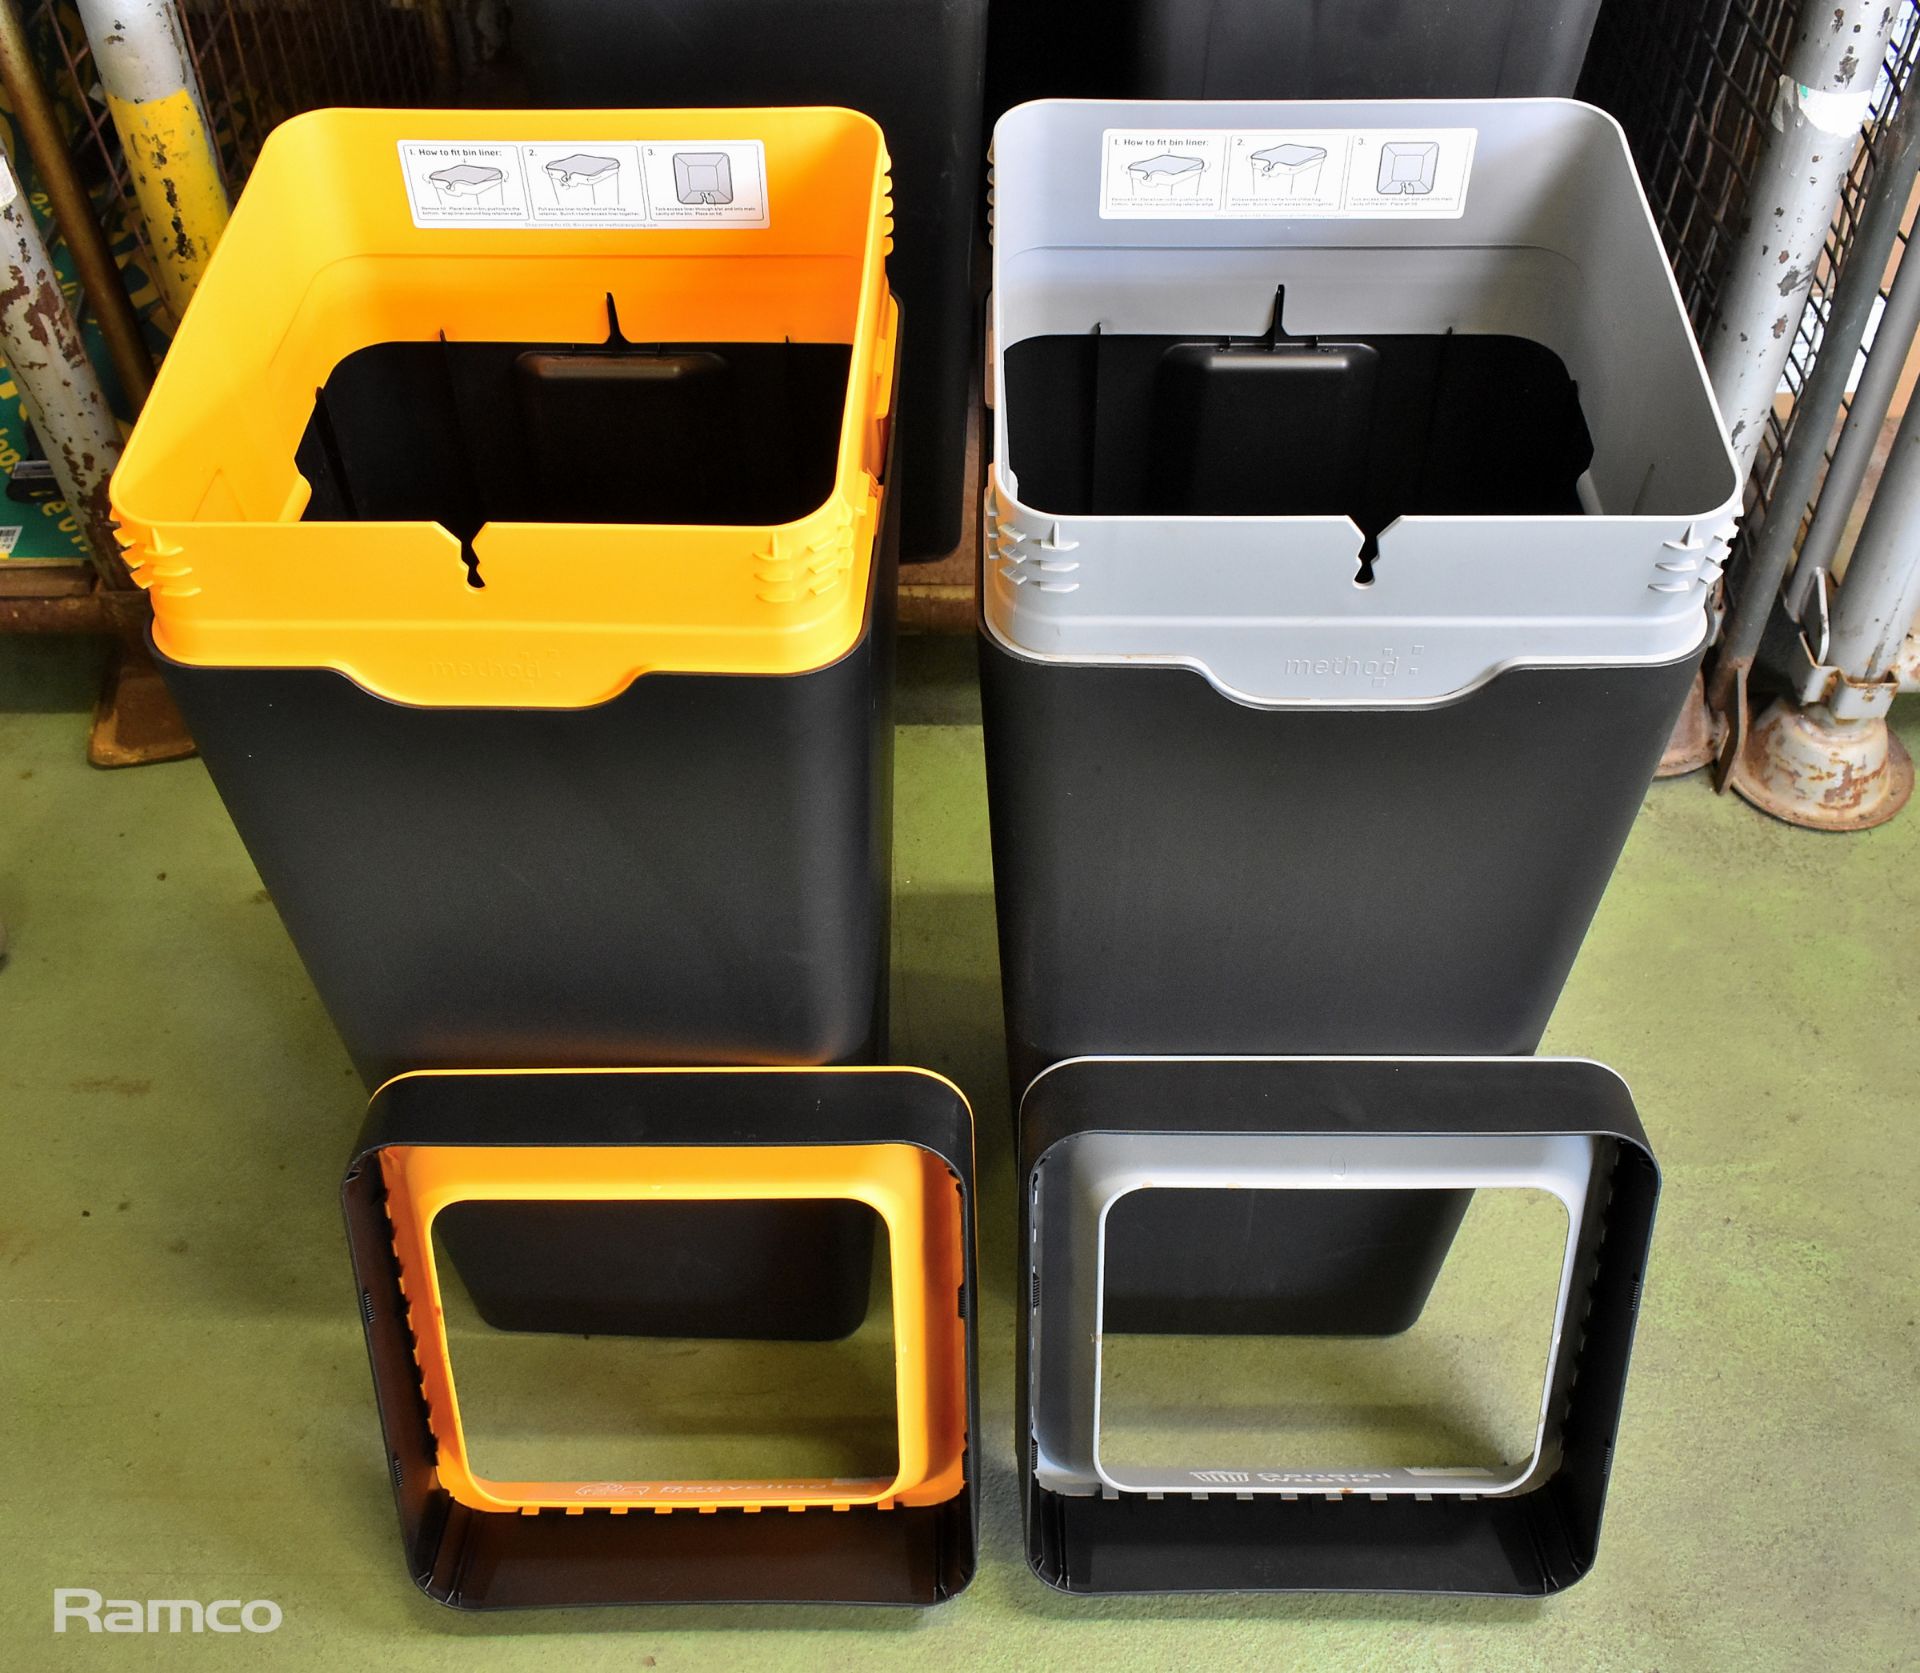 4x Method 60L mixed recycling bins, 2x Method 60L general waste bins - Image 3 of 3